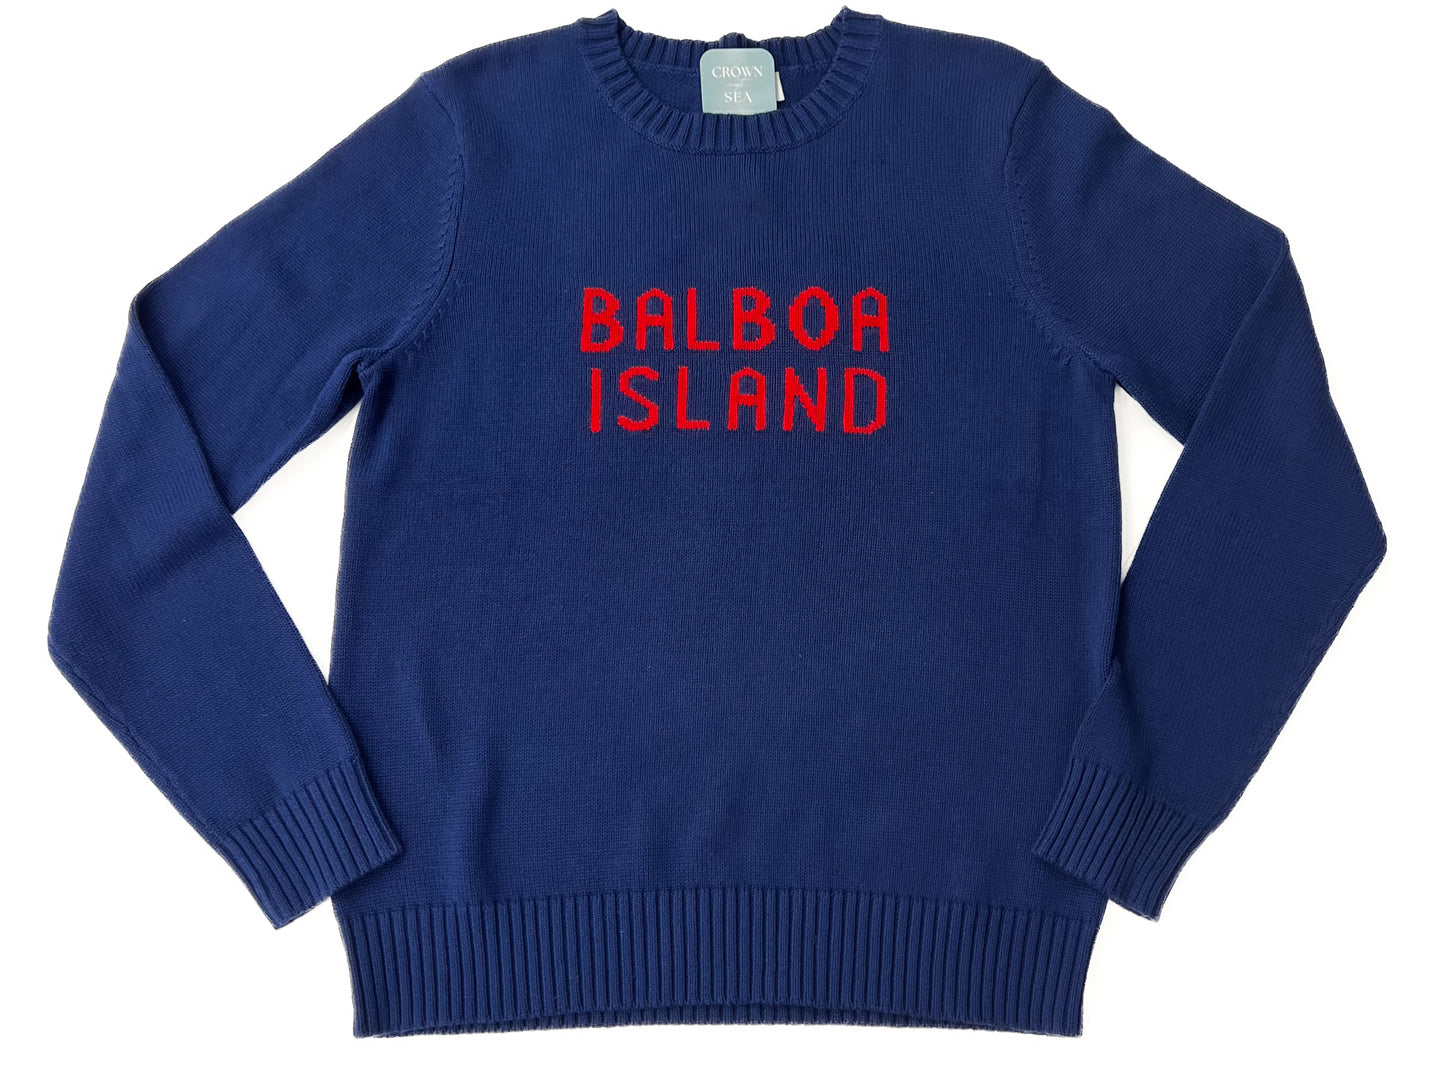 Balboa Island Blue Sweater with Red Stitch